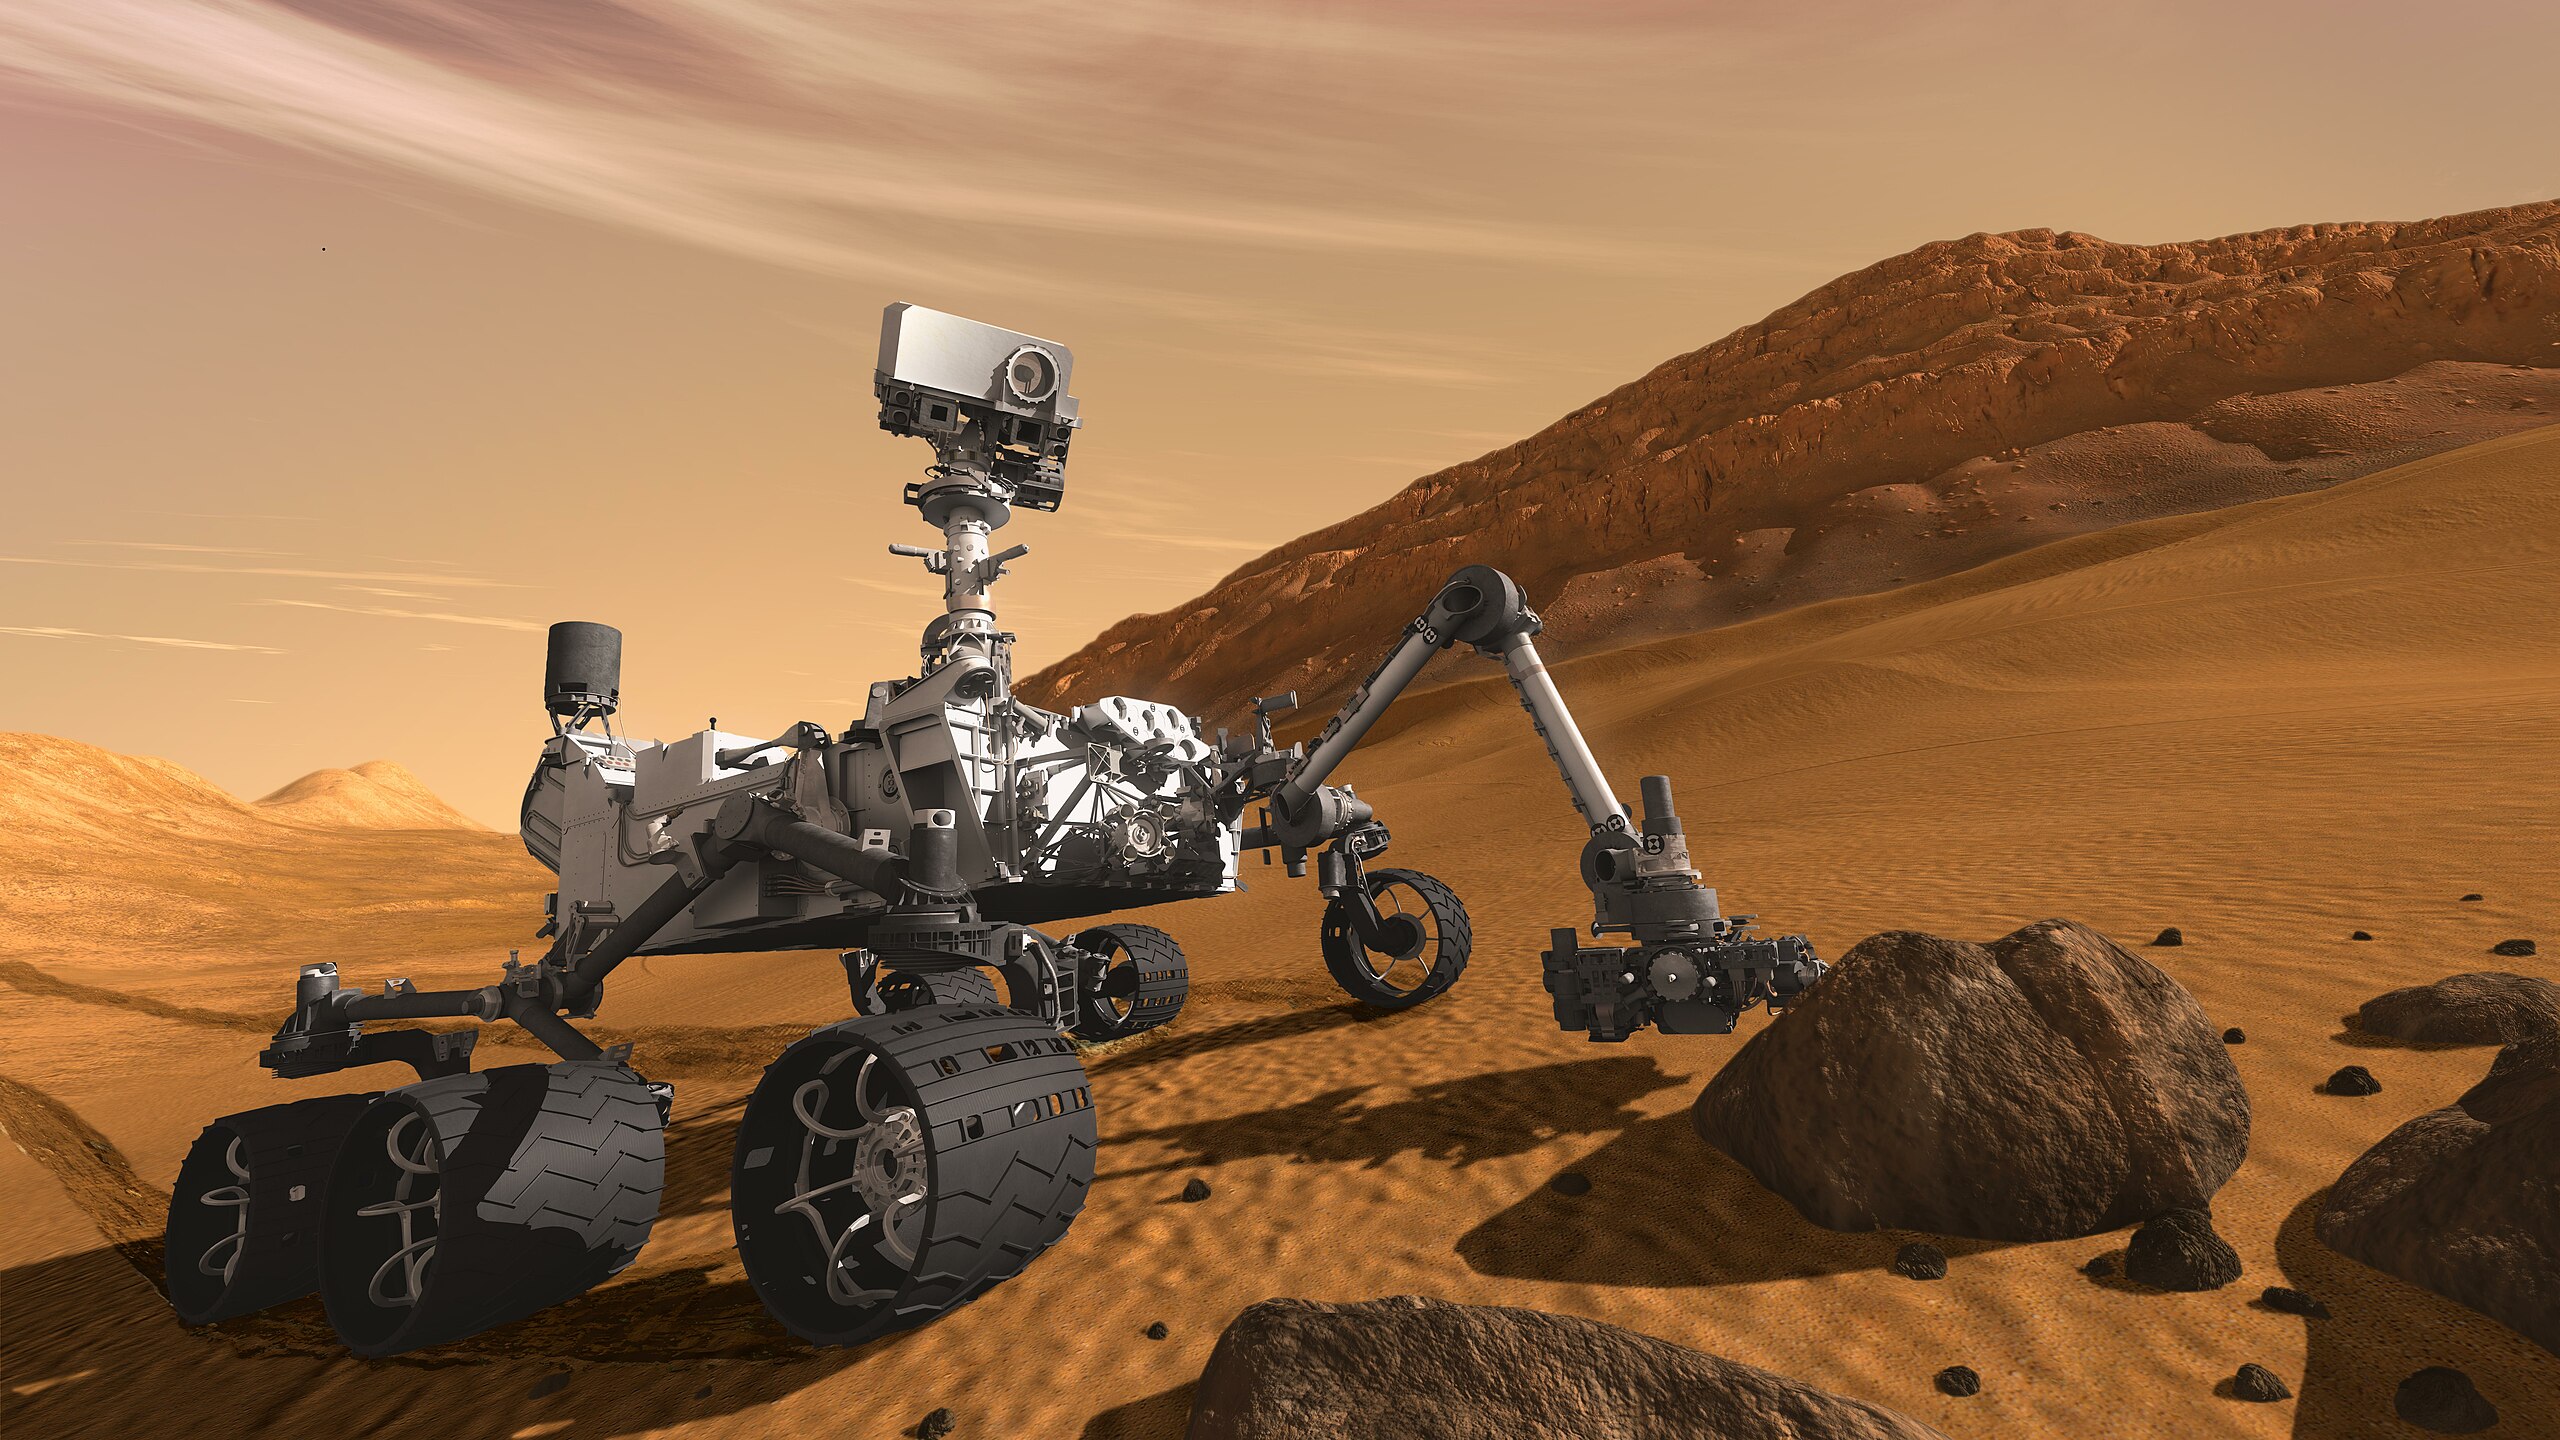 File:Curiosity - The Next Mars Rover.jpg - Wikipedia